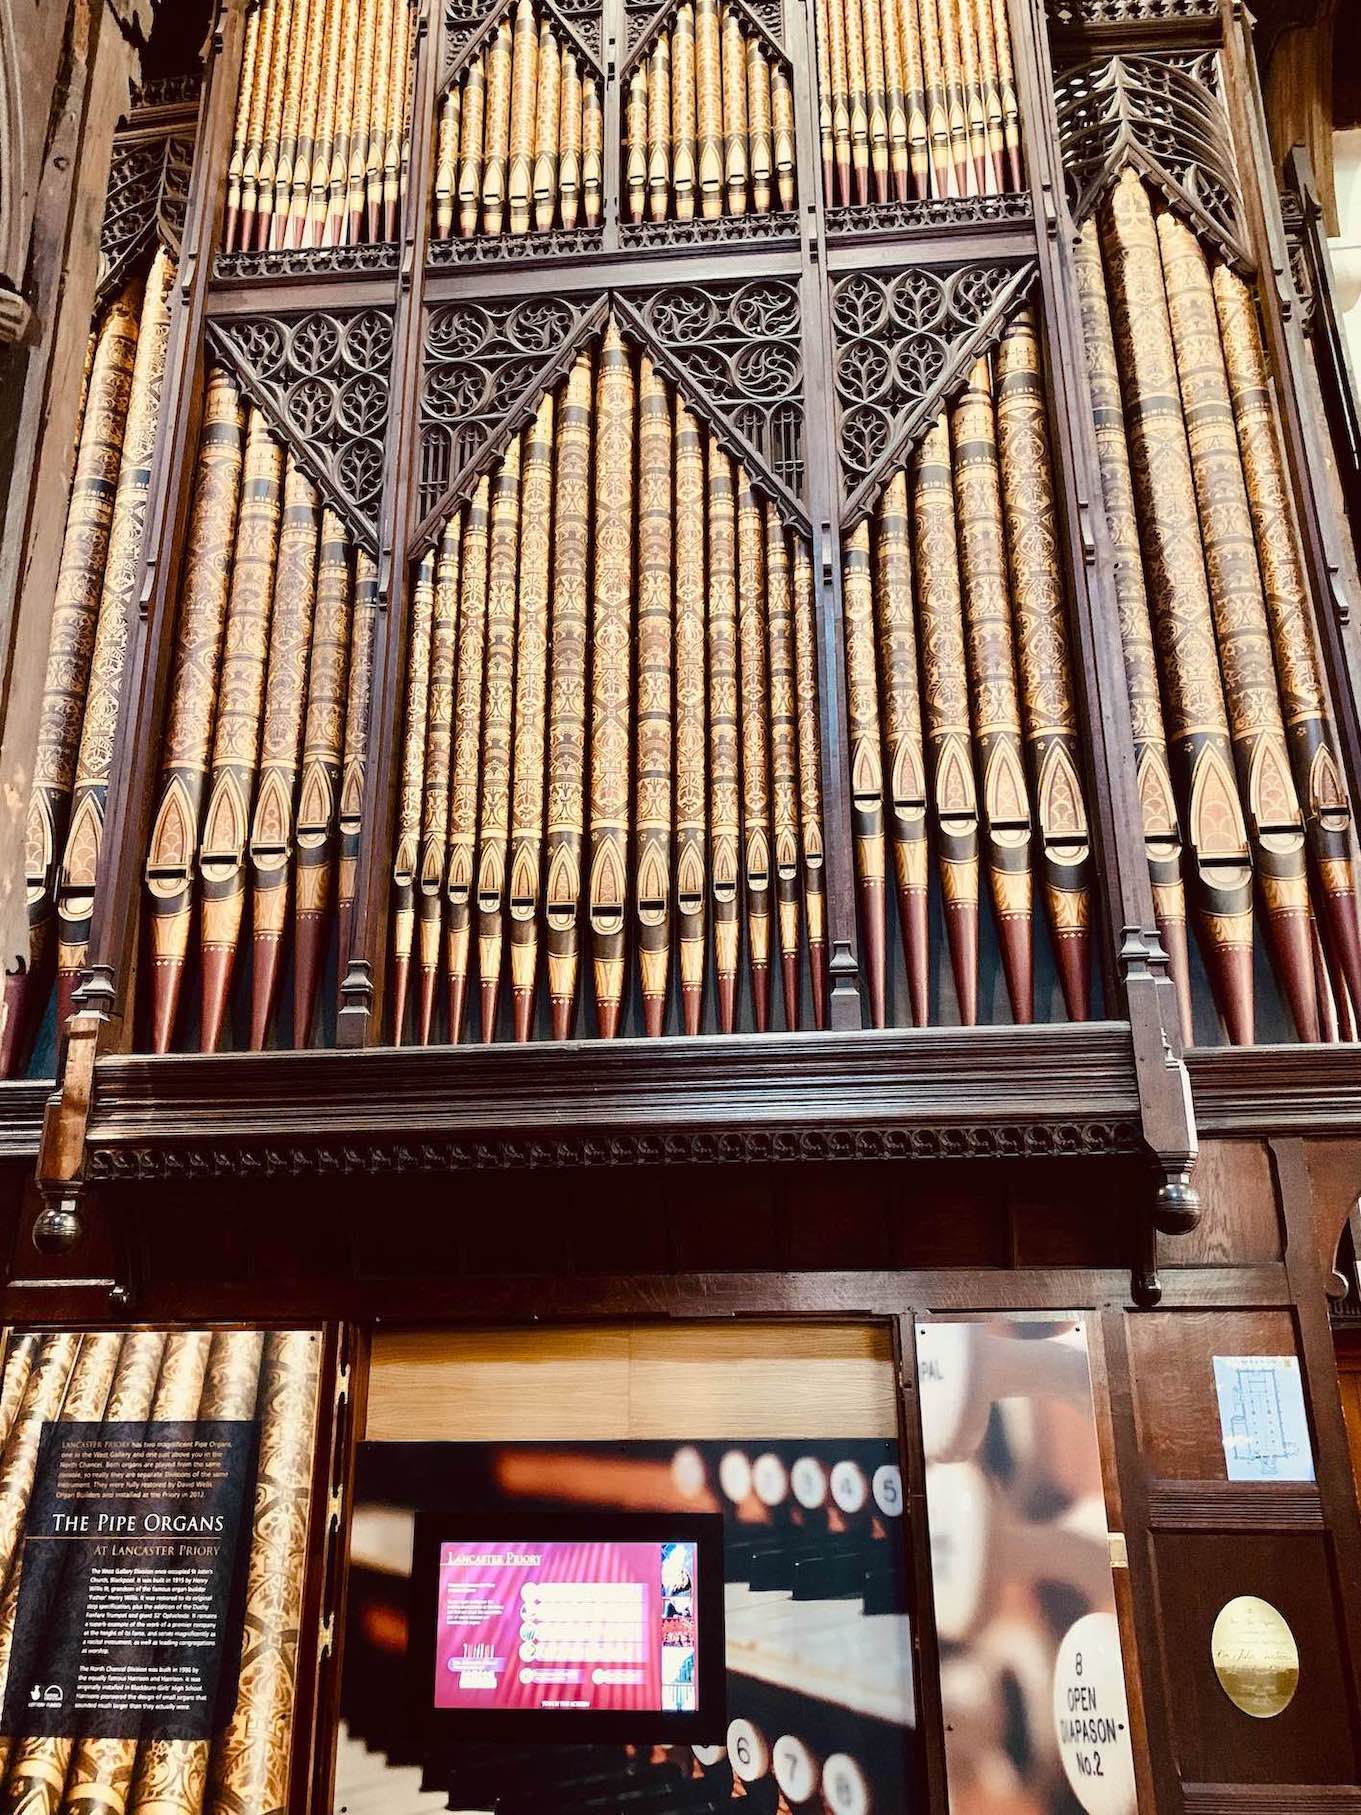 The organ at Lancaster Priory.